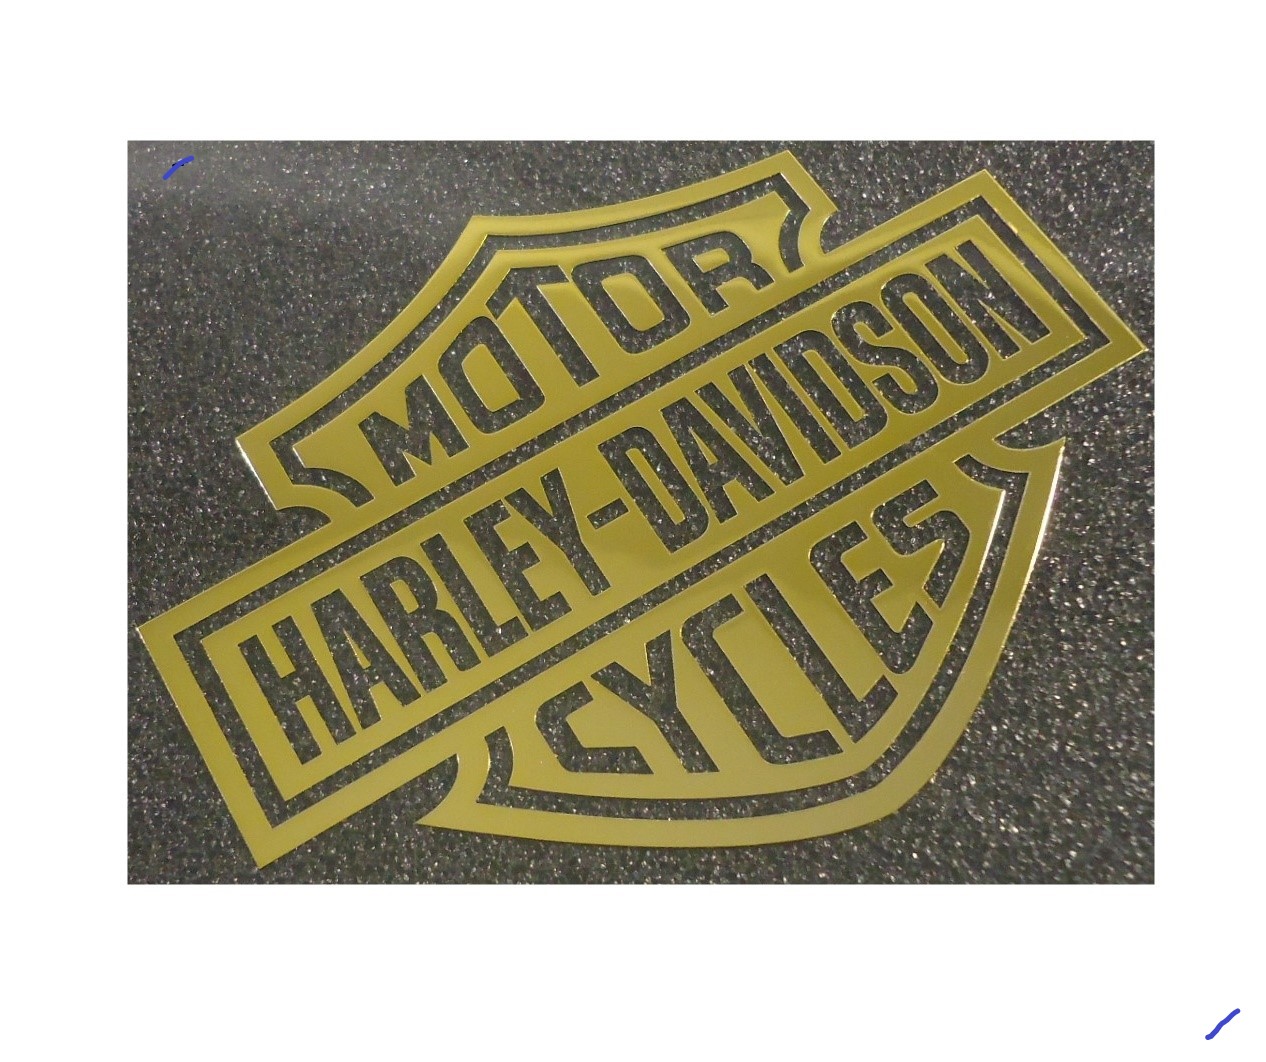 HARLEY-DAVIDSON CYCLES nalepka Metal Edition